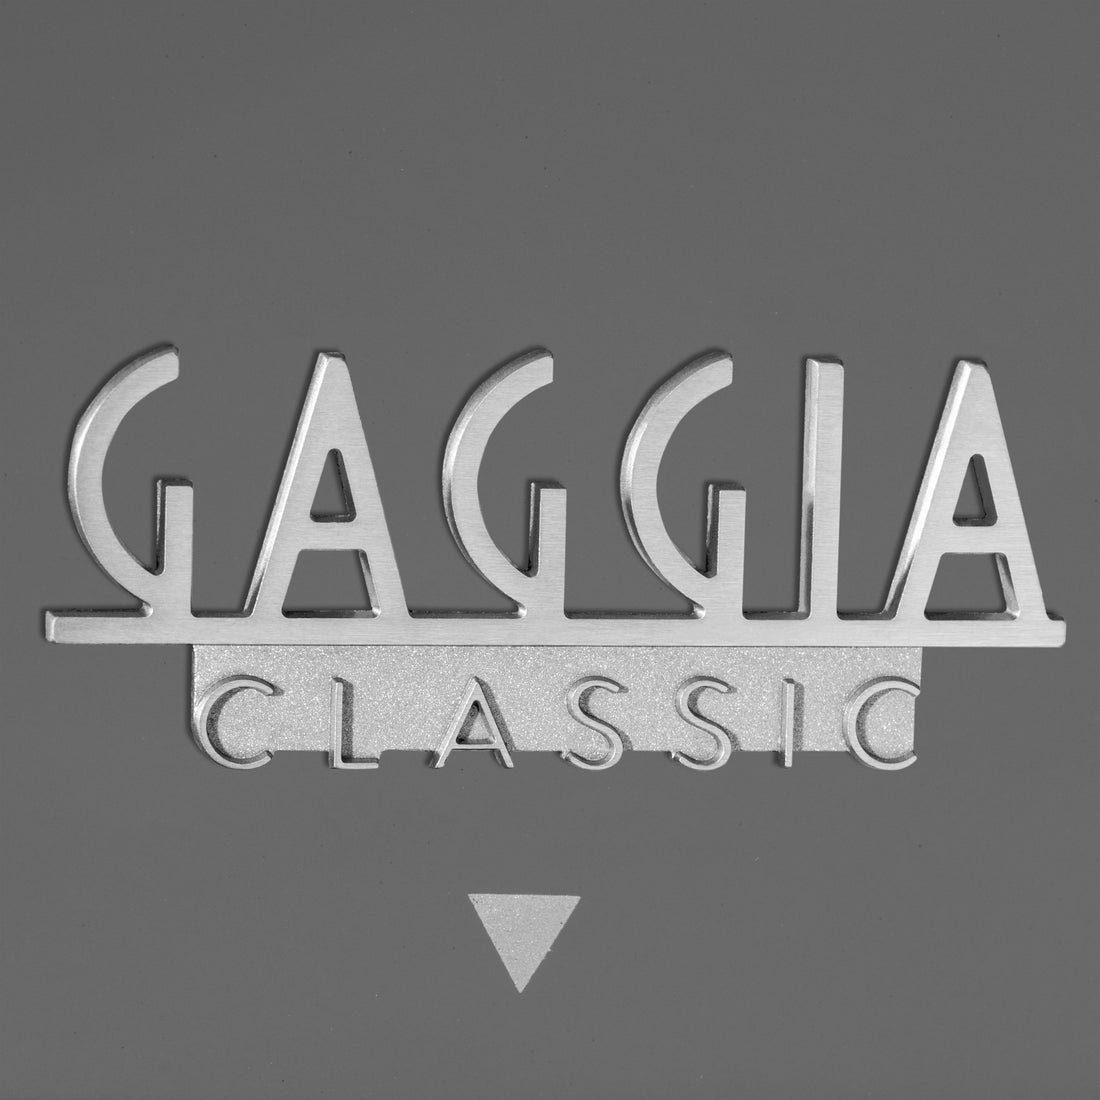 Refurbished Gaggia Classic Evo Pro Espresso Machine in Industrial Grey